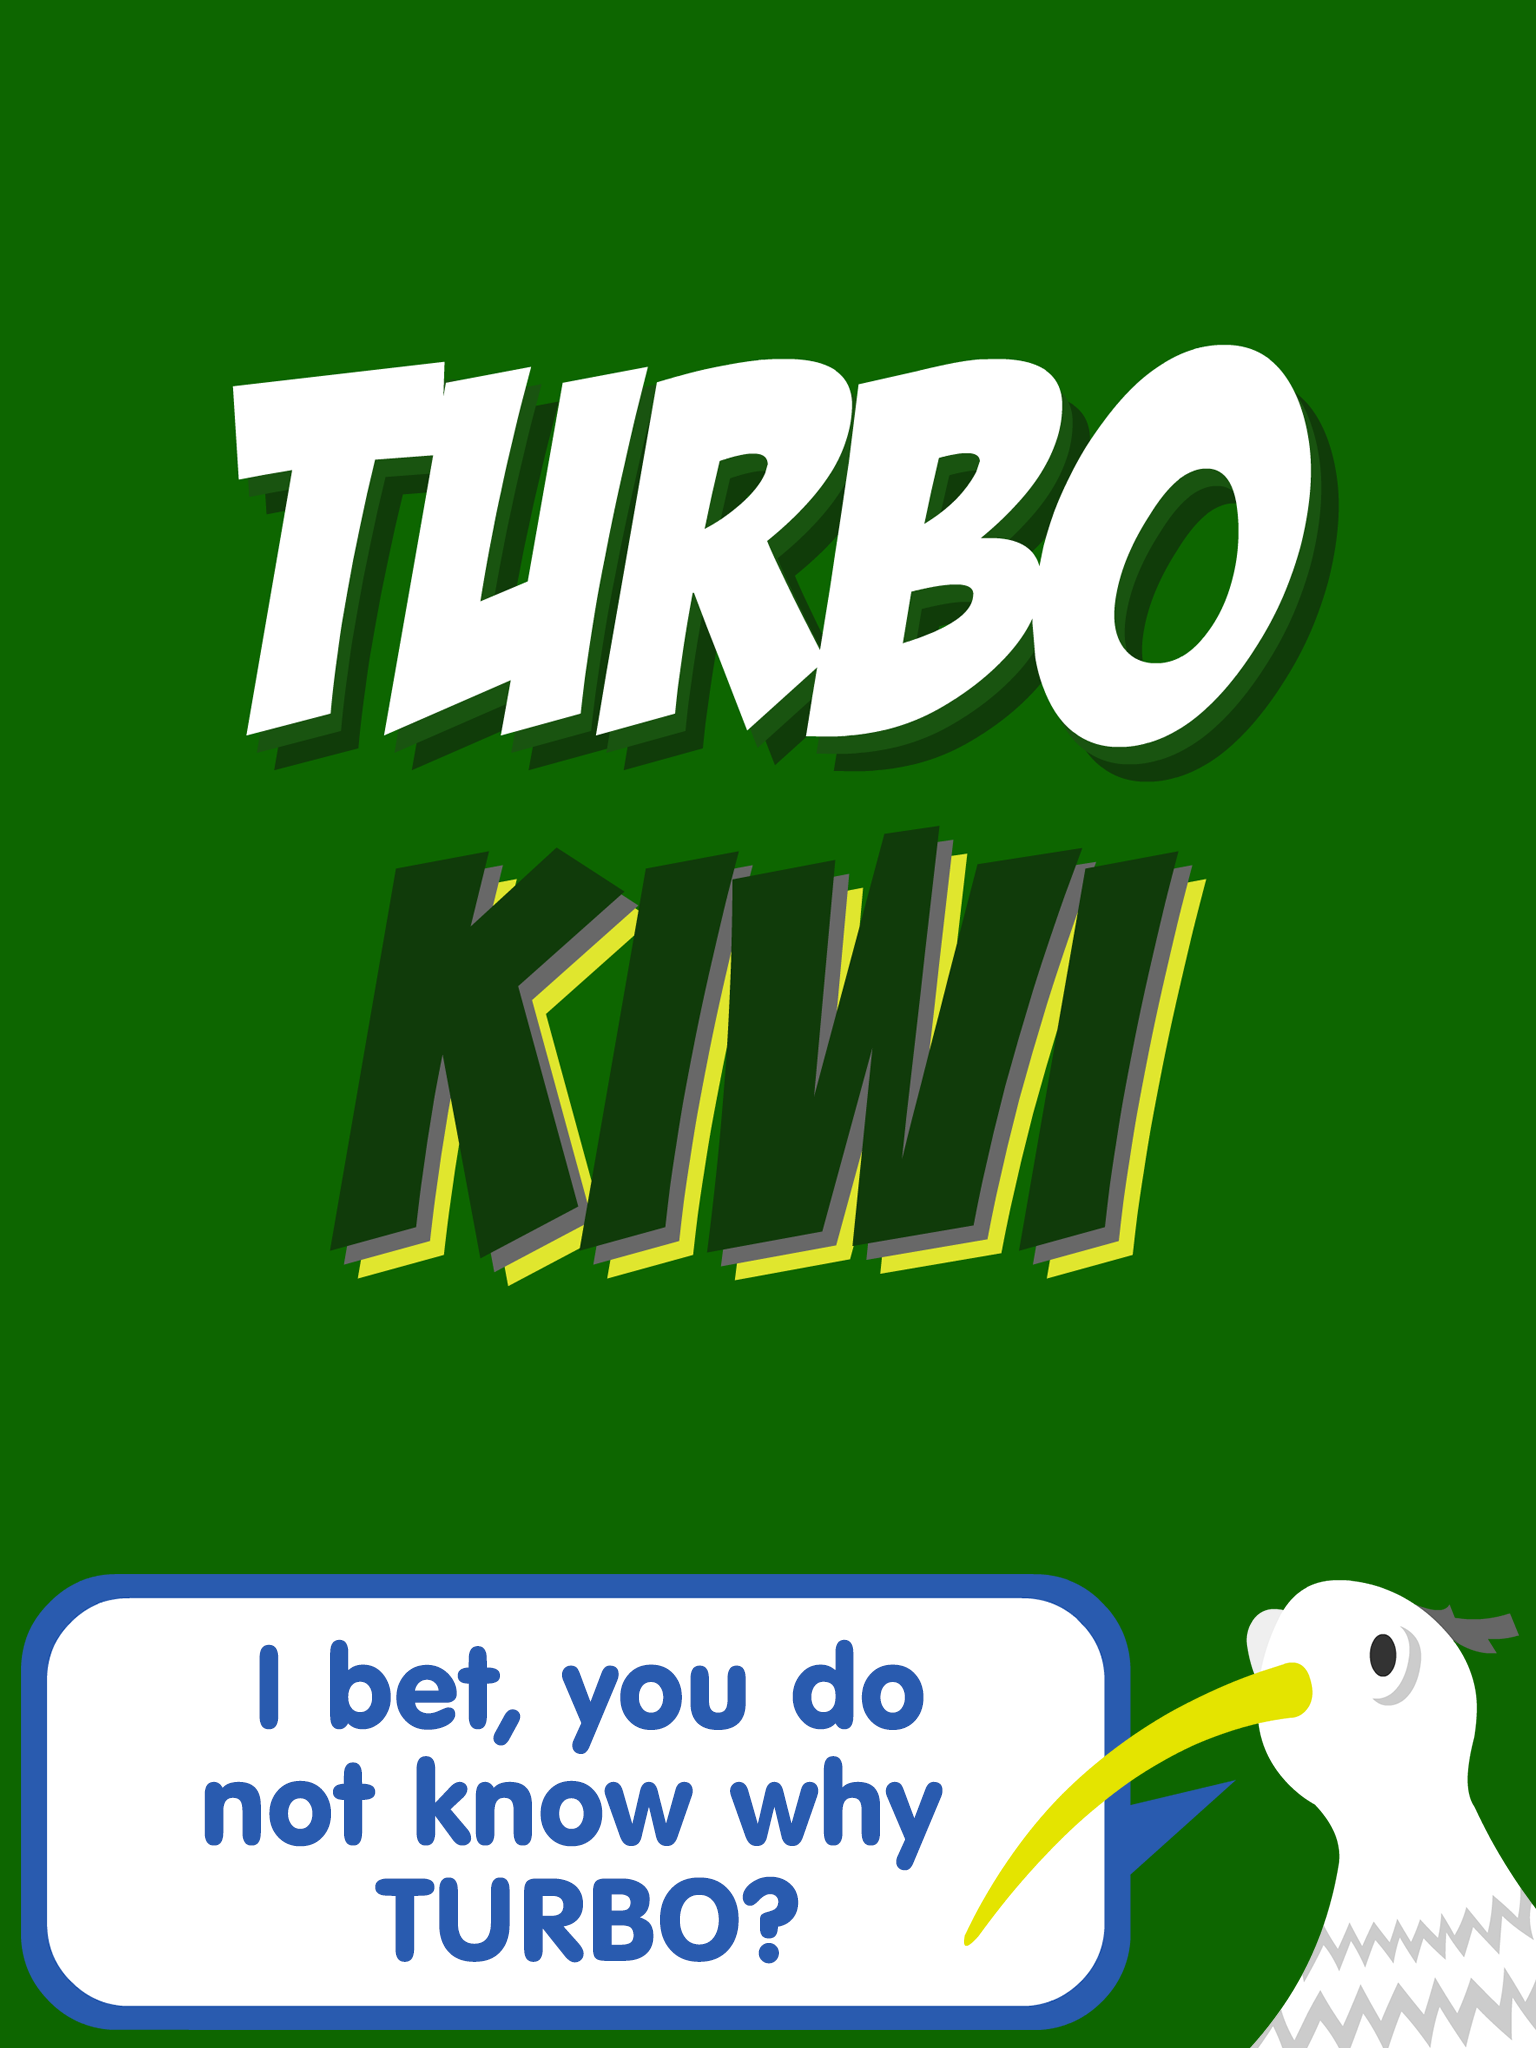 Turbo Kiwiのキャプチャ